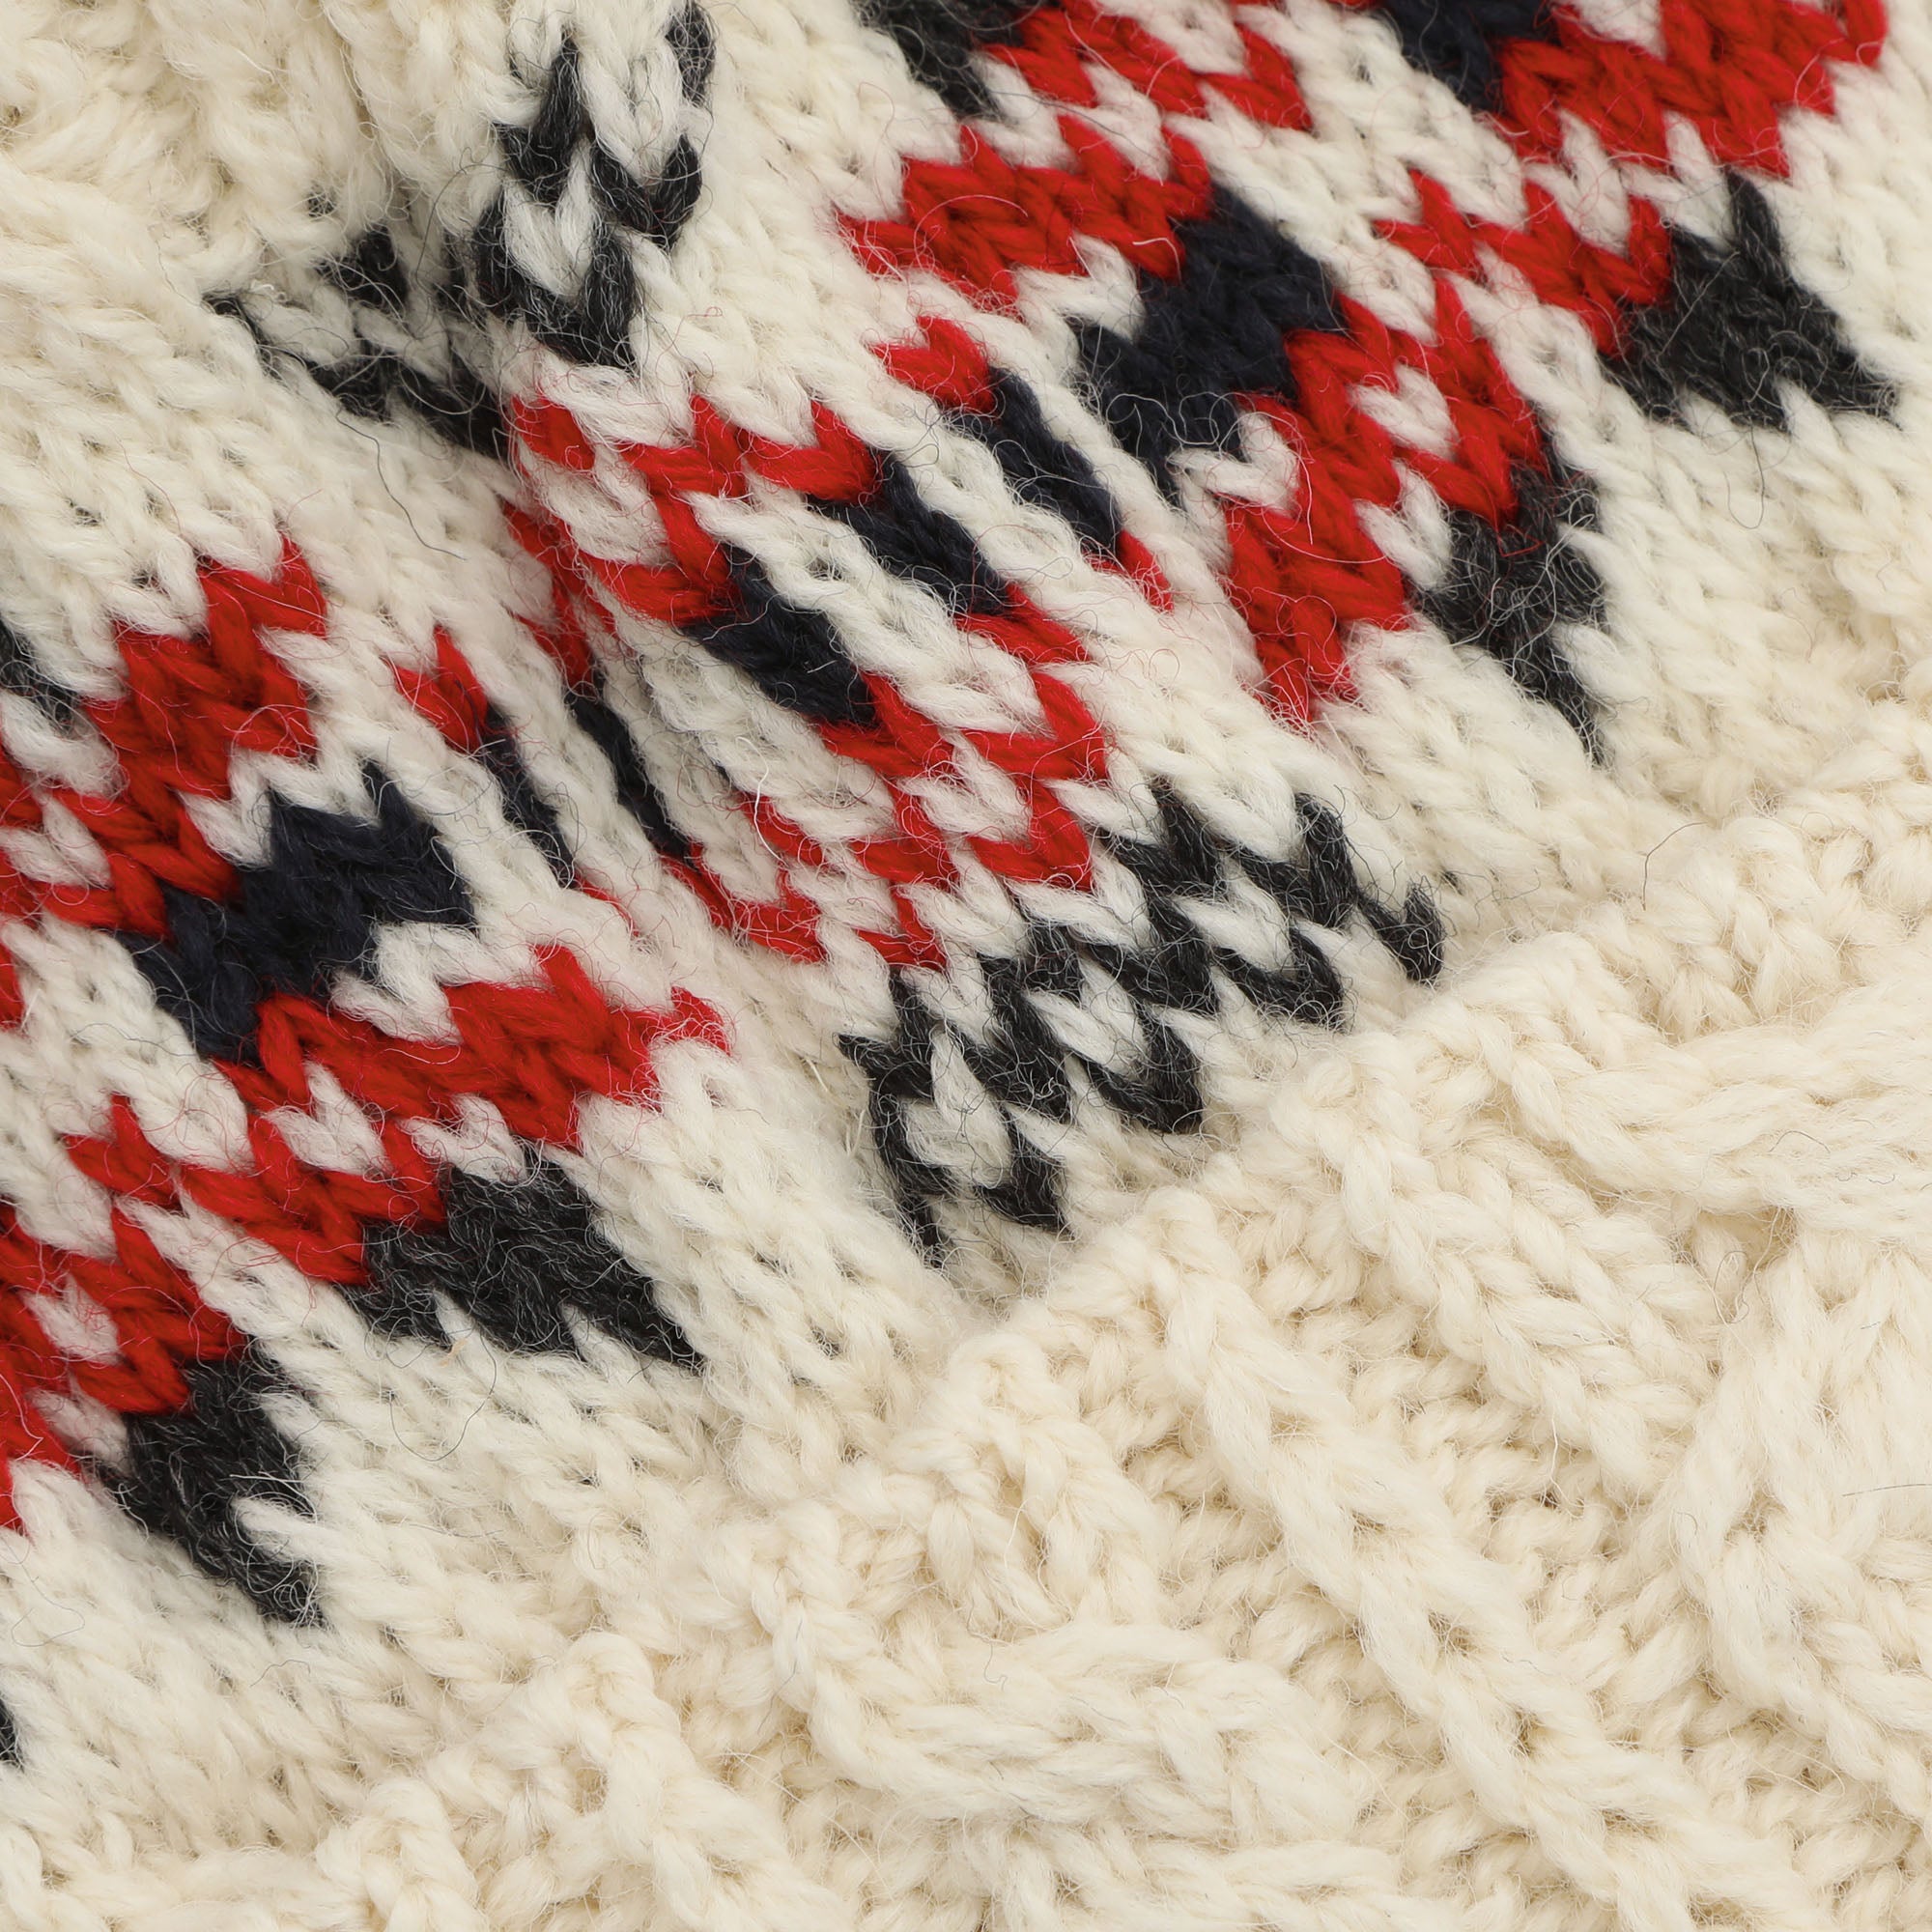 Cable Knit Snowflake Hat - Ecru